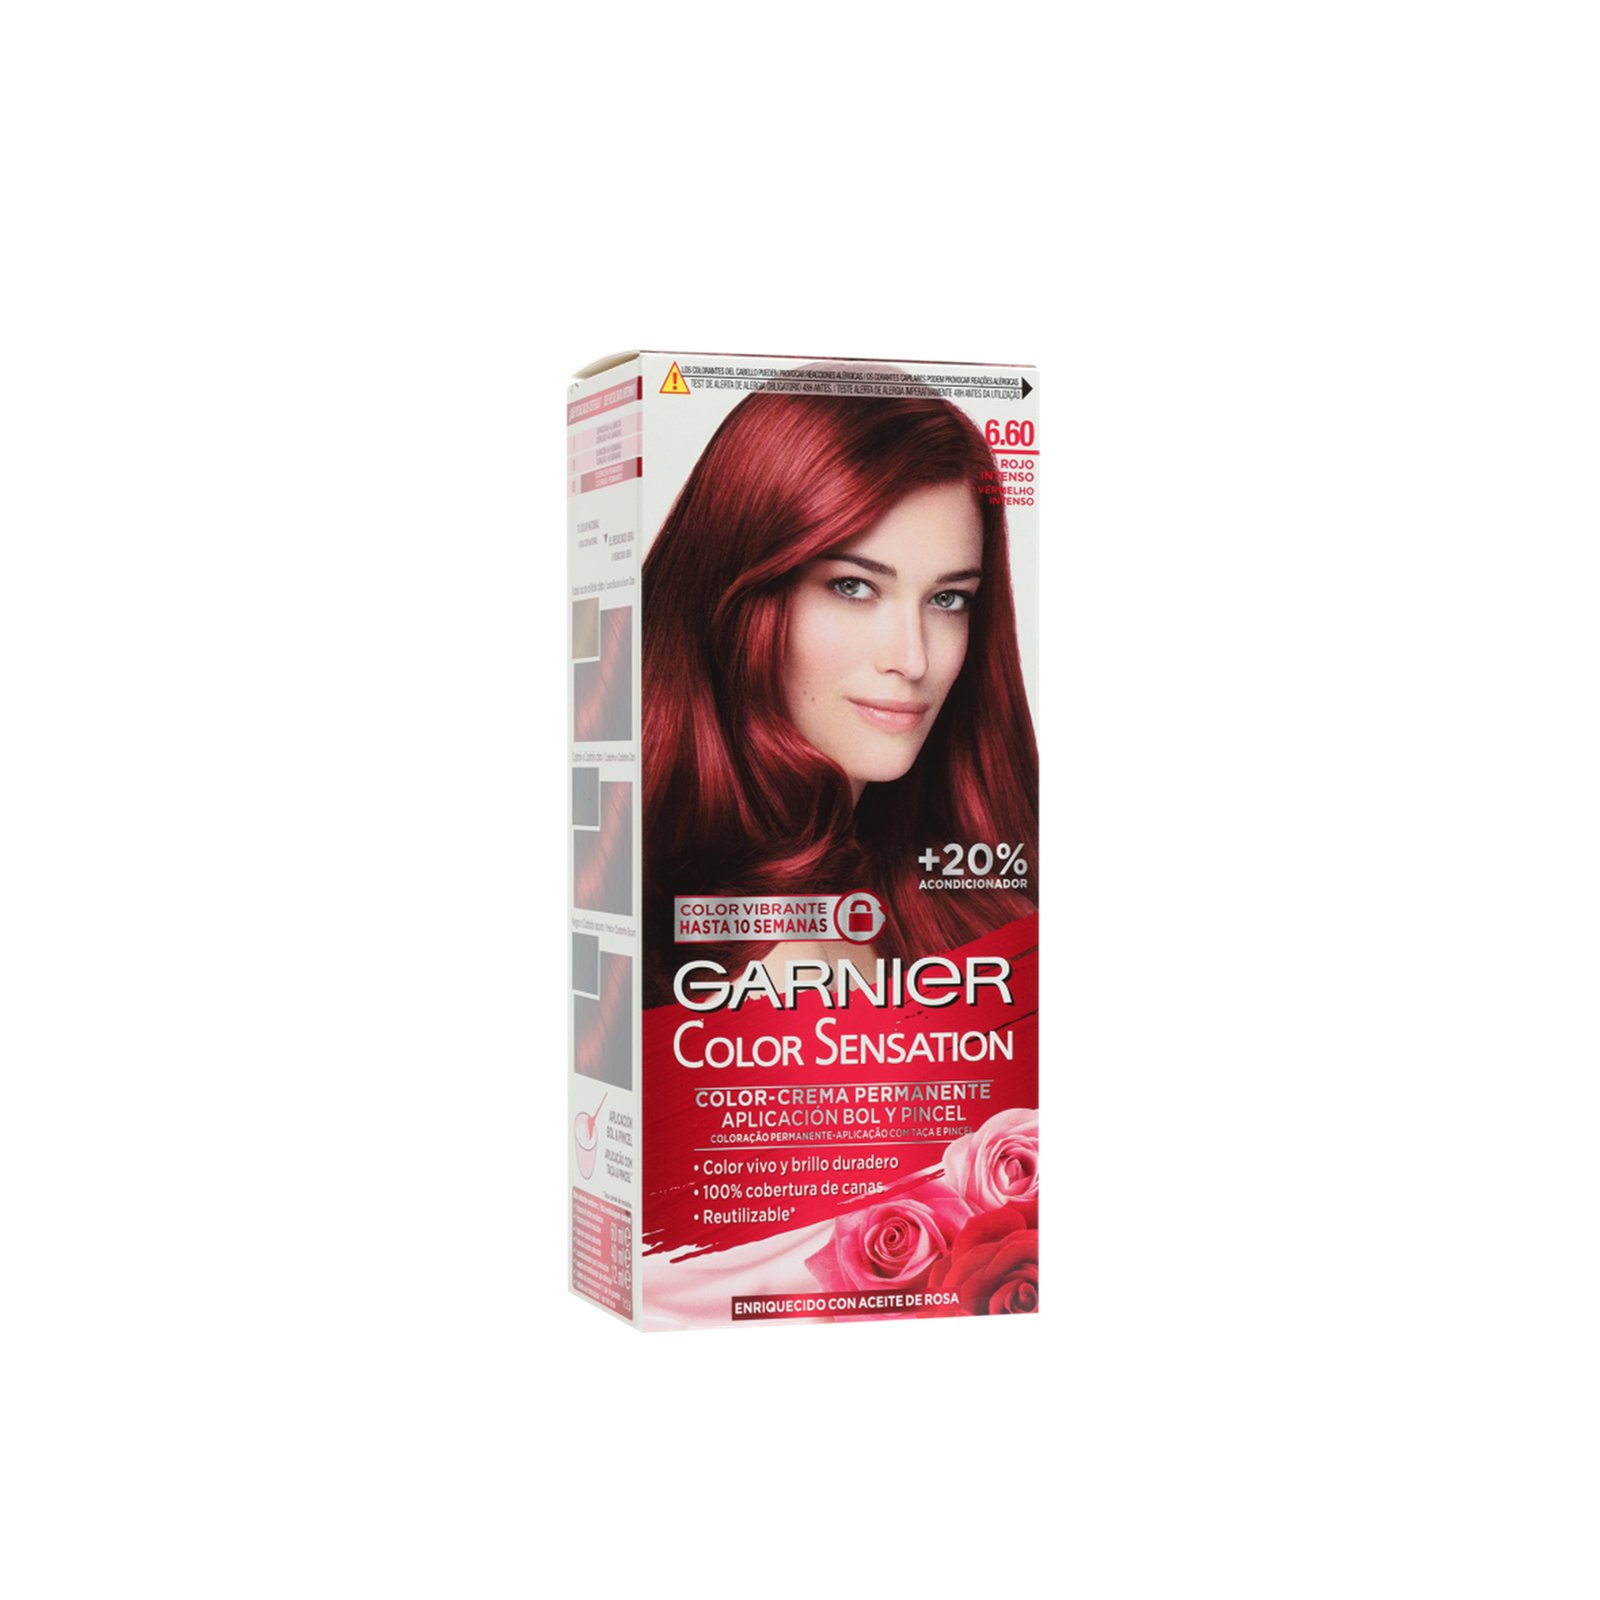 Garnier Color Sensation Permanent Hair Dye 6.60 Intense Ruby Red